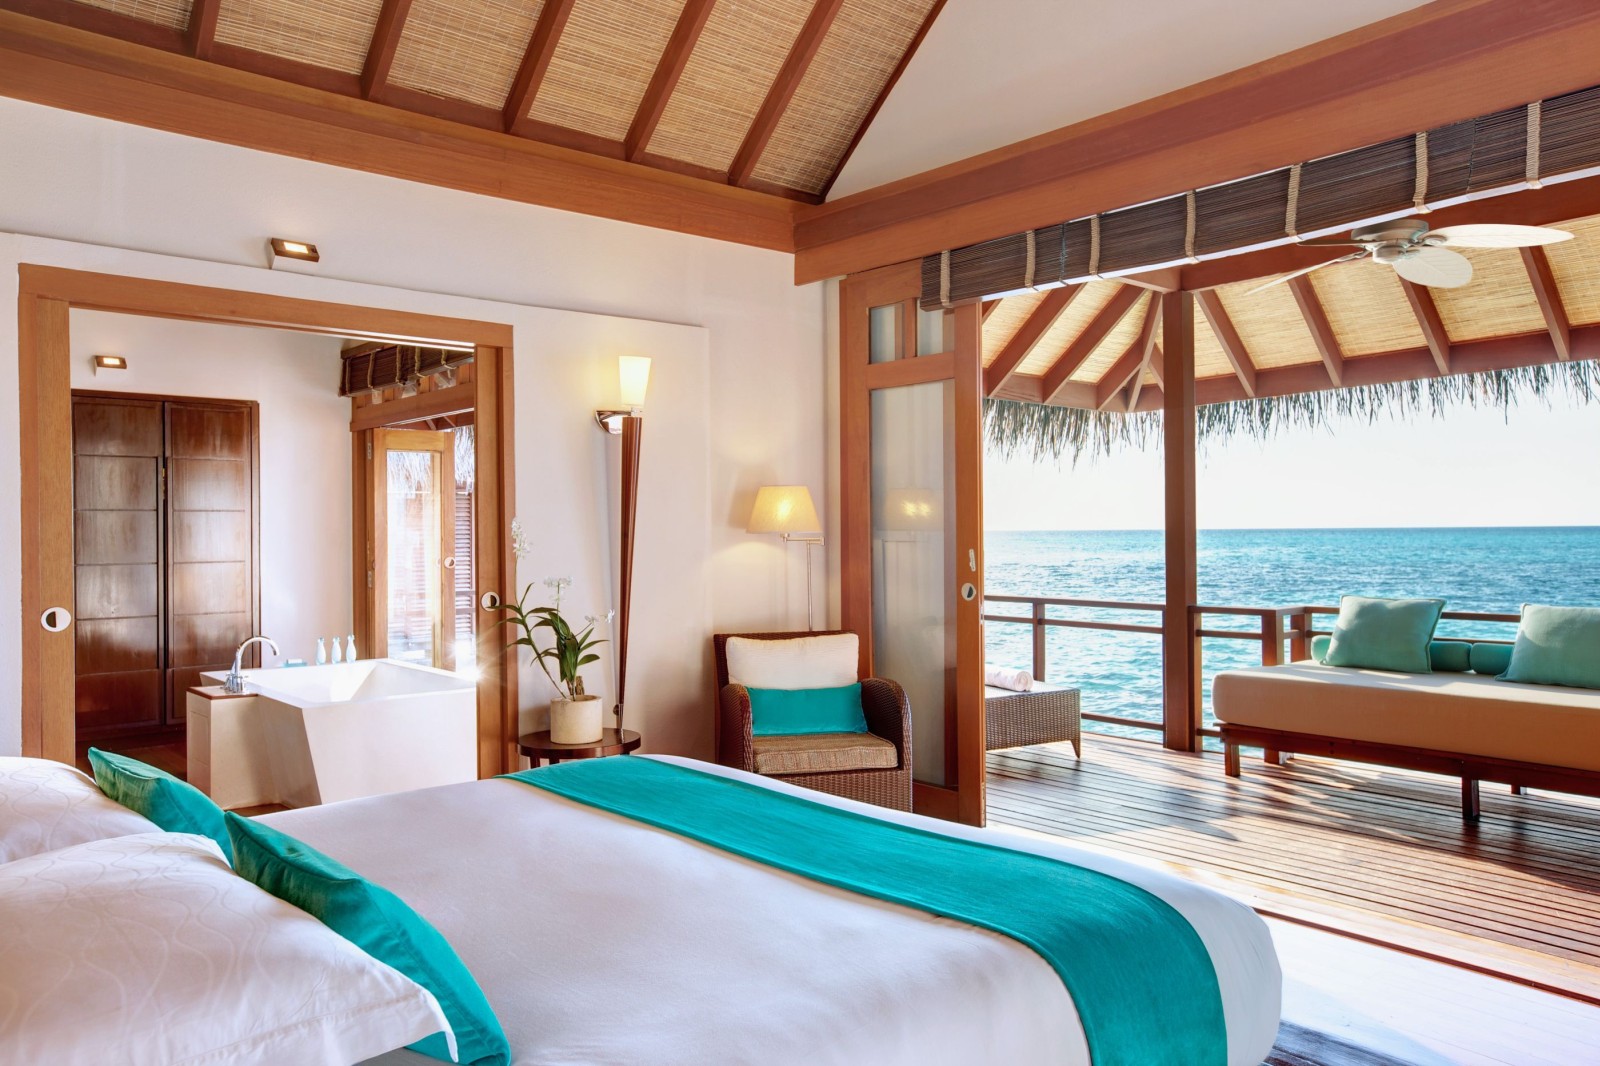 Double bedroom of a prestige water villa at LUX Maldives